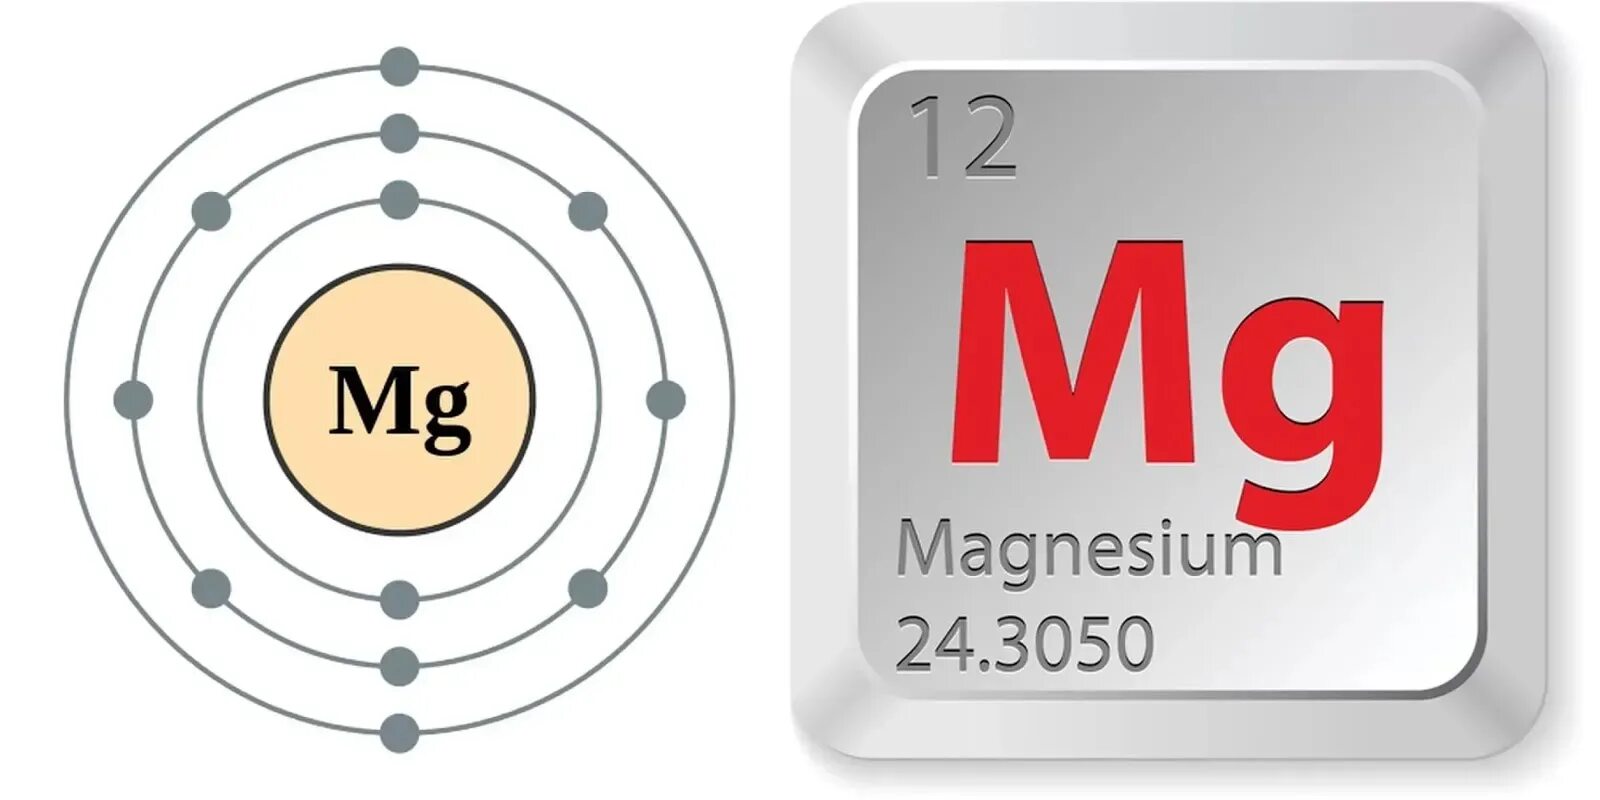 Магний название элемента. Магний химический элемент. Магний символ химического элемента. Магний в таблице Менделеева. Магний в таблице Менделеева обозначение.